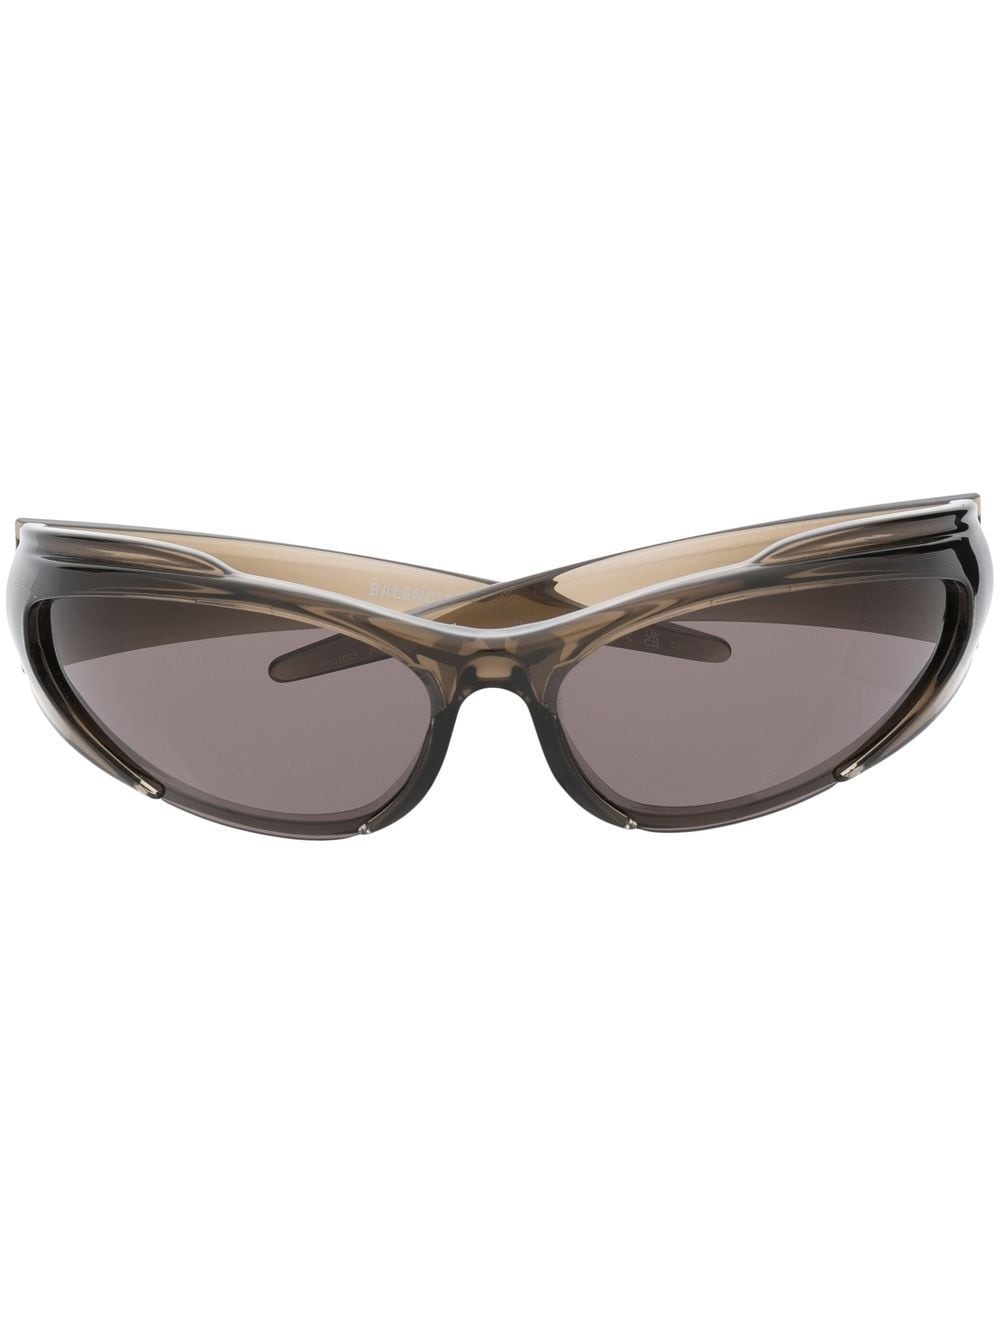 oval-frame translucent sunglasses - 1